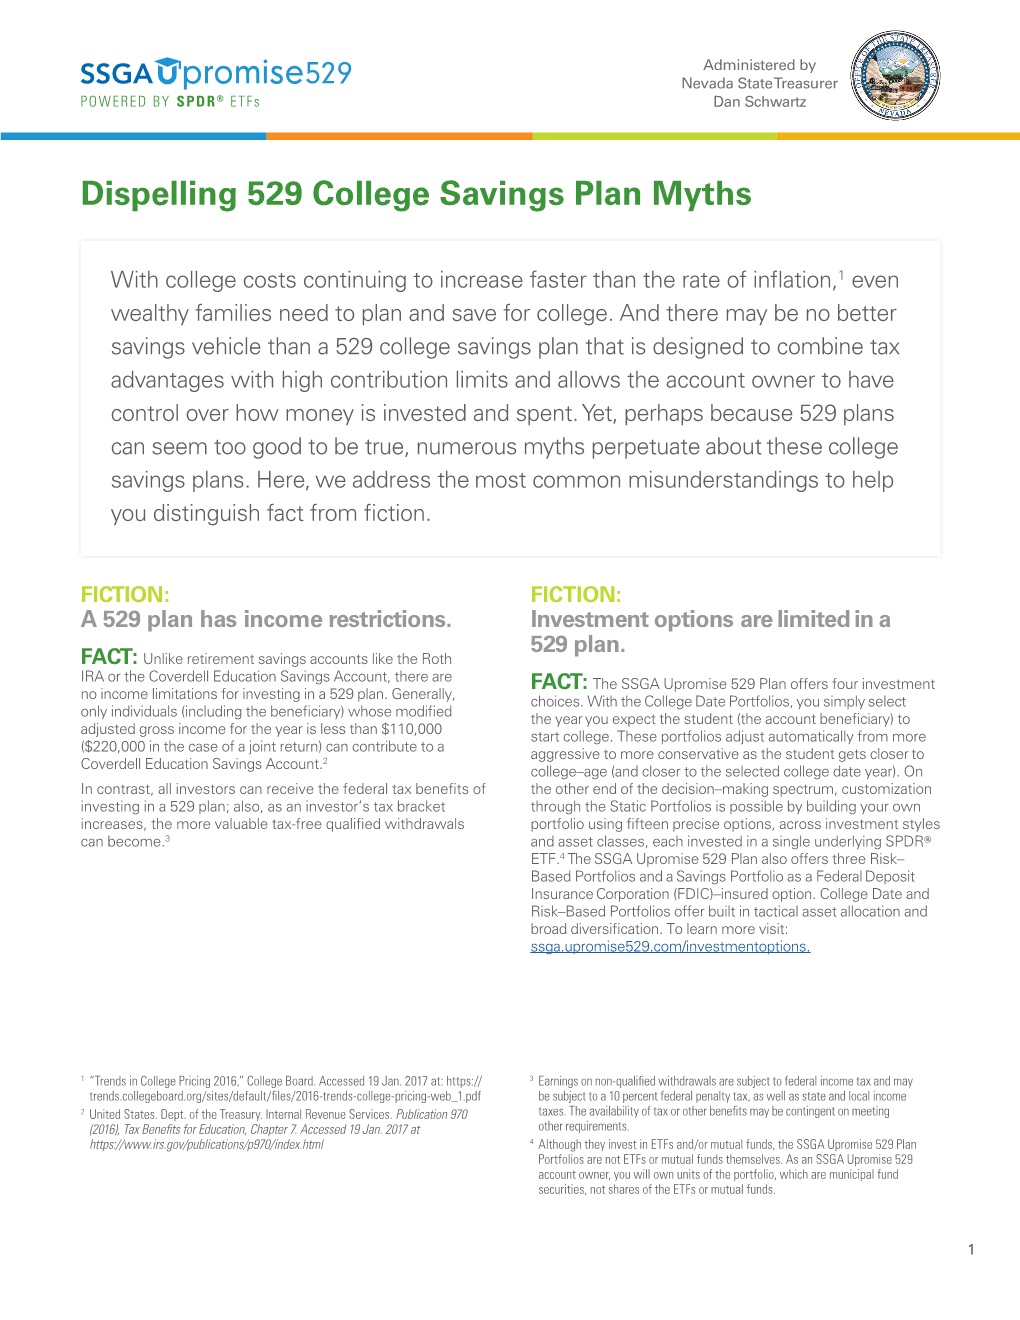 Dispelling 529 College Savings Plan Myths